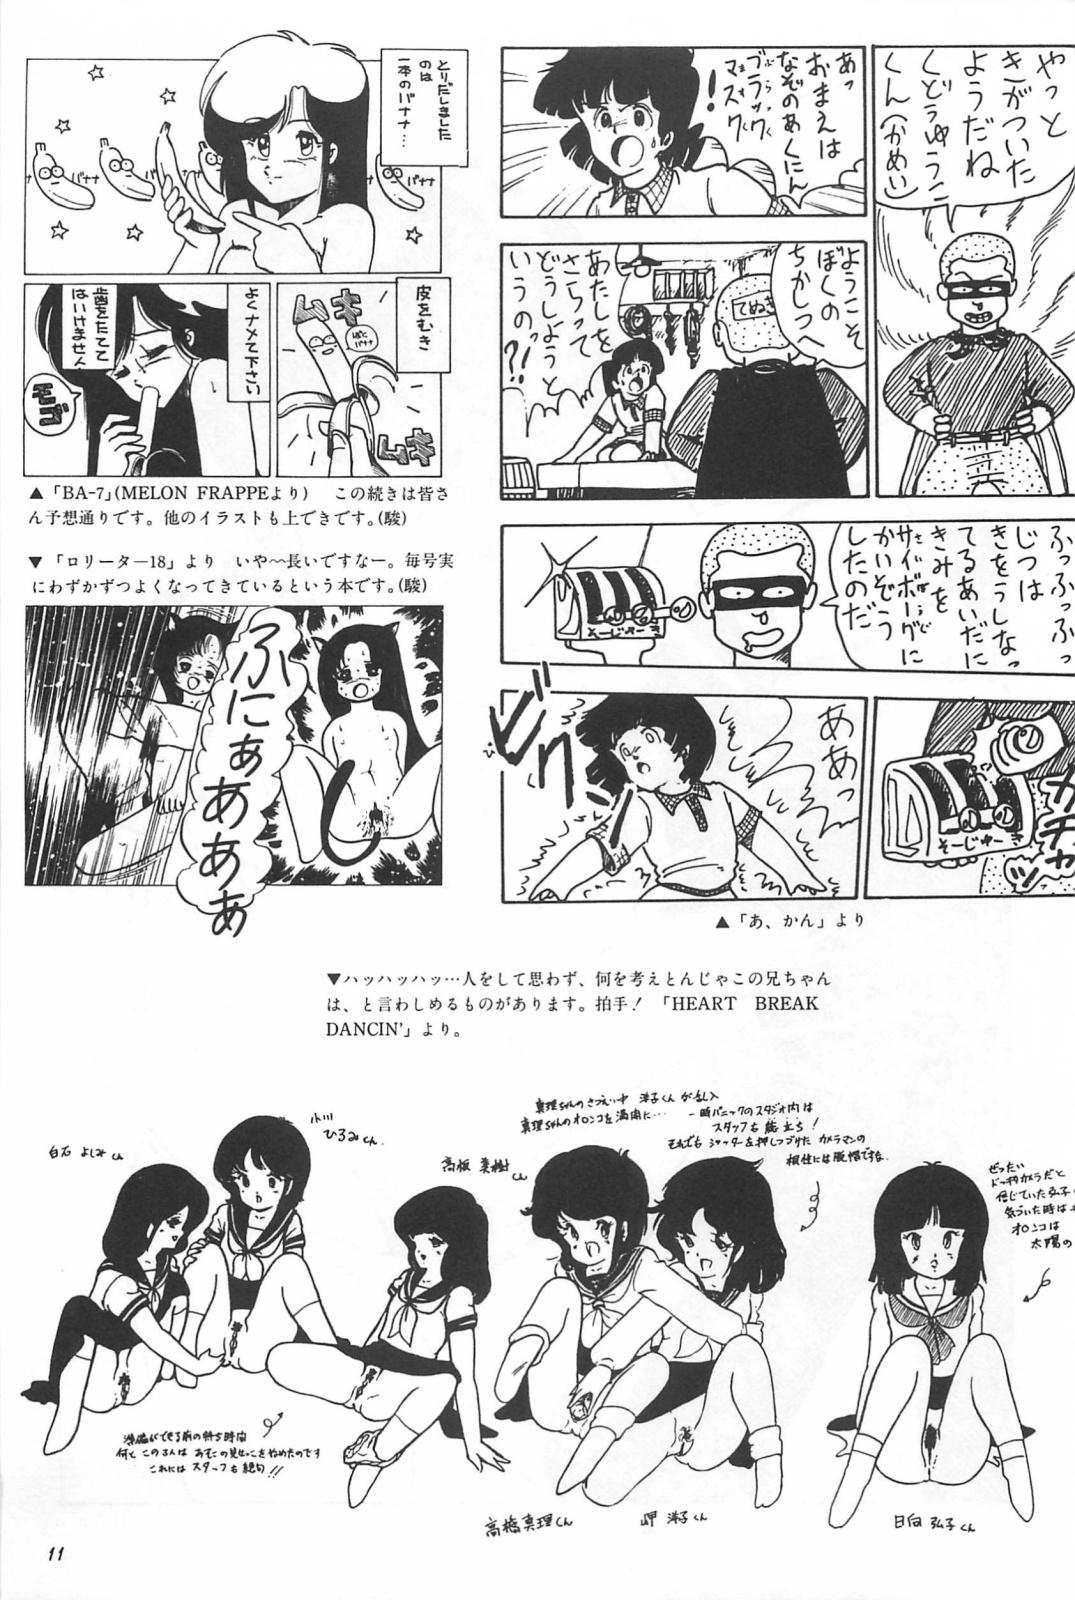 Trans Bishoujo Syndrome - Lolita syndrome - Urusei yatsura Voyeur - Page 13